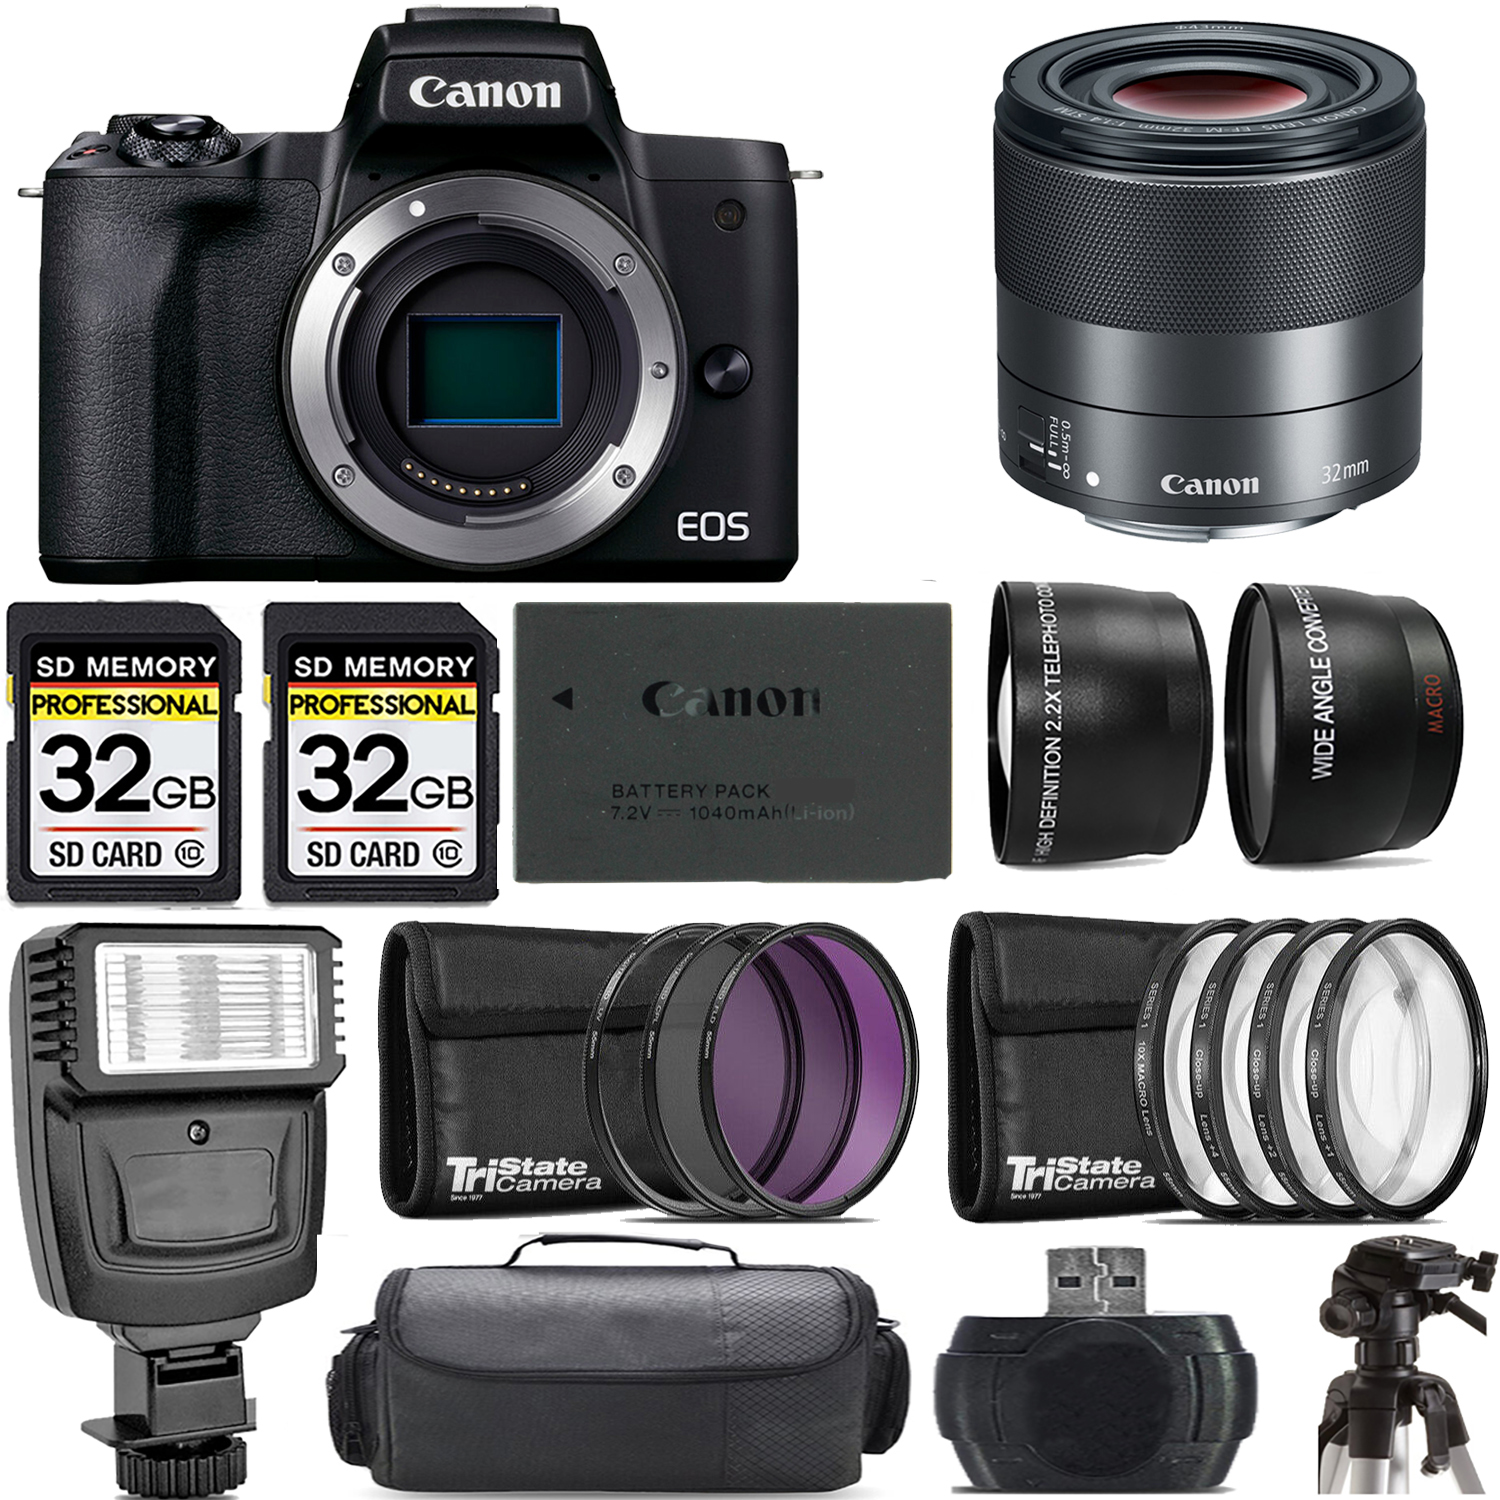 EOS M50 Mark II Camera (Black) +32mm f/1.4 STM Lens +Flash- Kit *FREE SHIPPING*